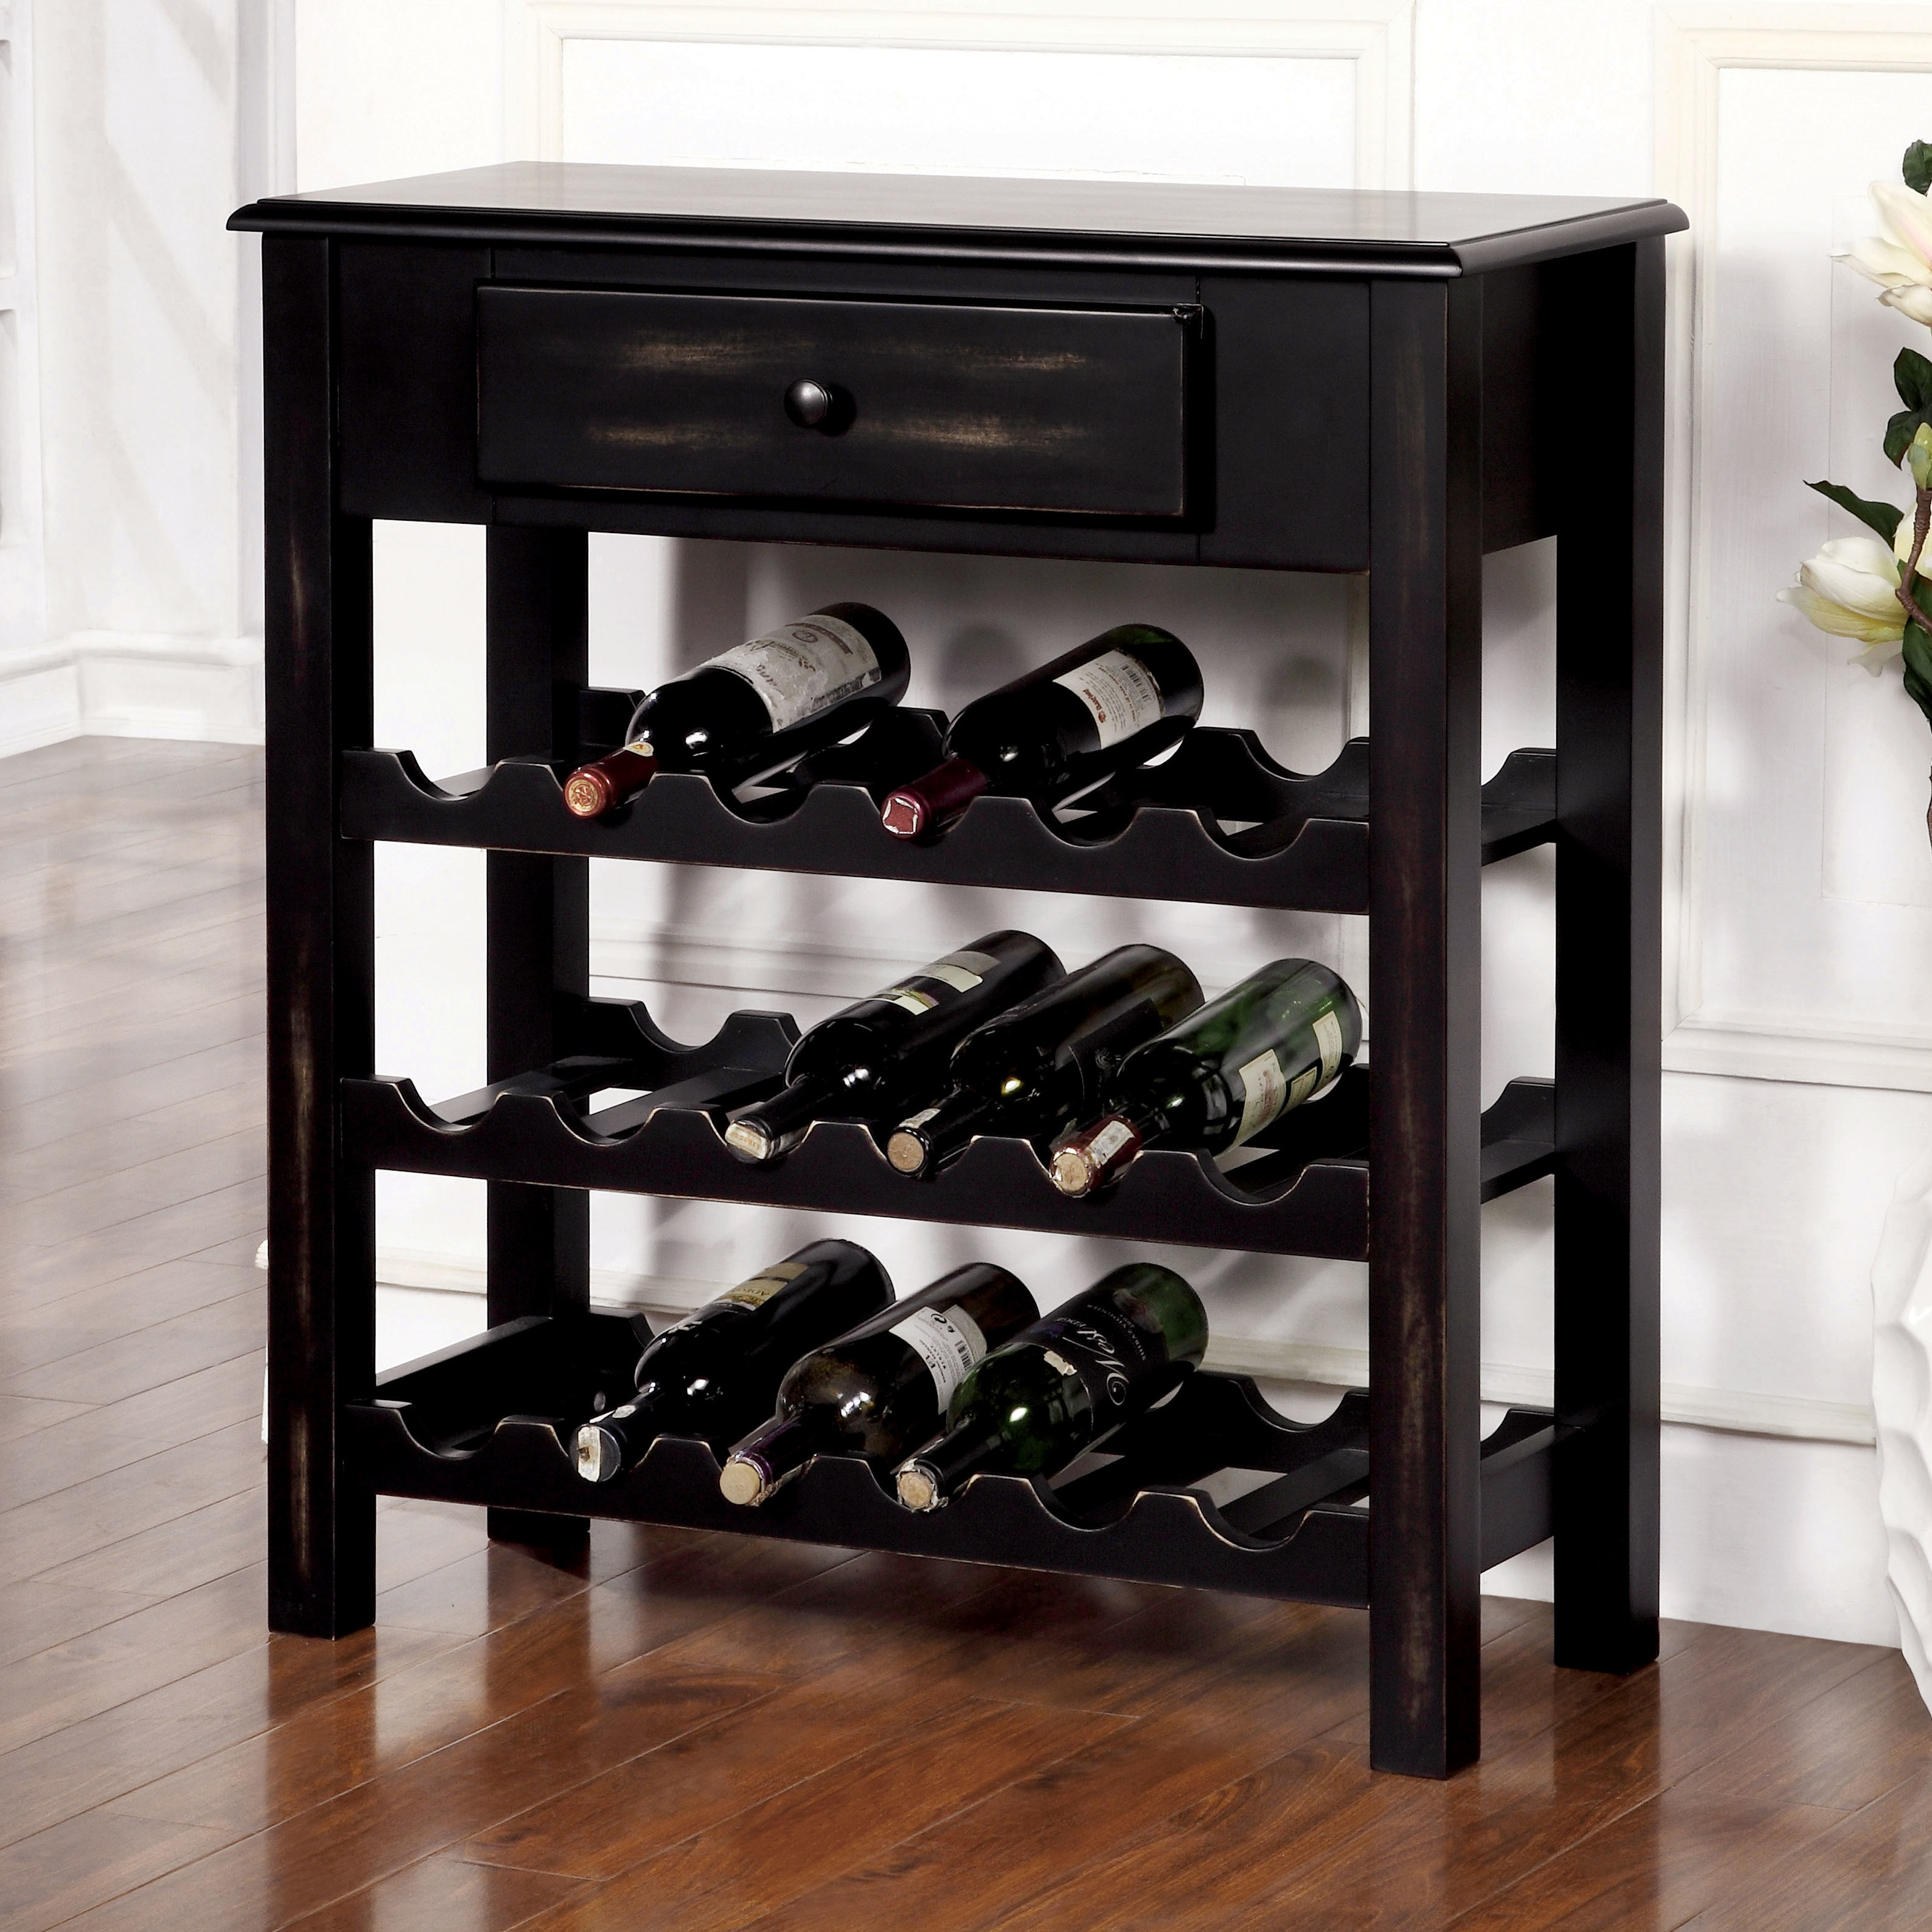 Best ideas about Floor Wine Racks
. Save or Pin Cotopaxi 18 Bottle Floor Wine Rack Now.